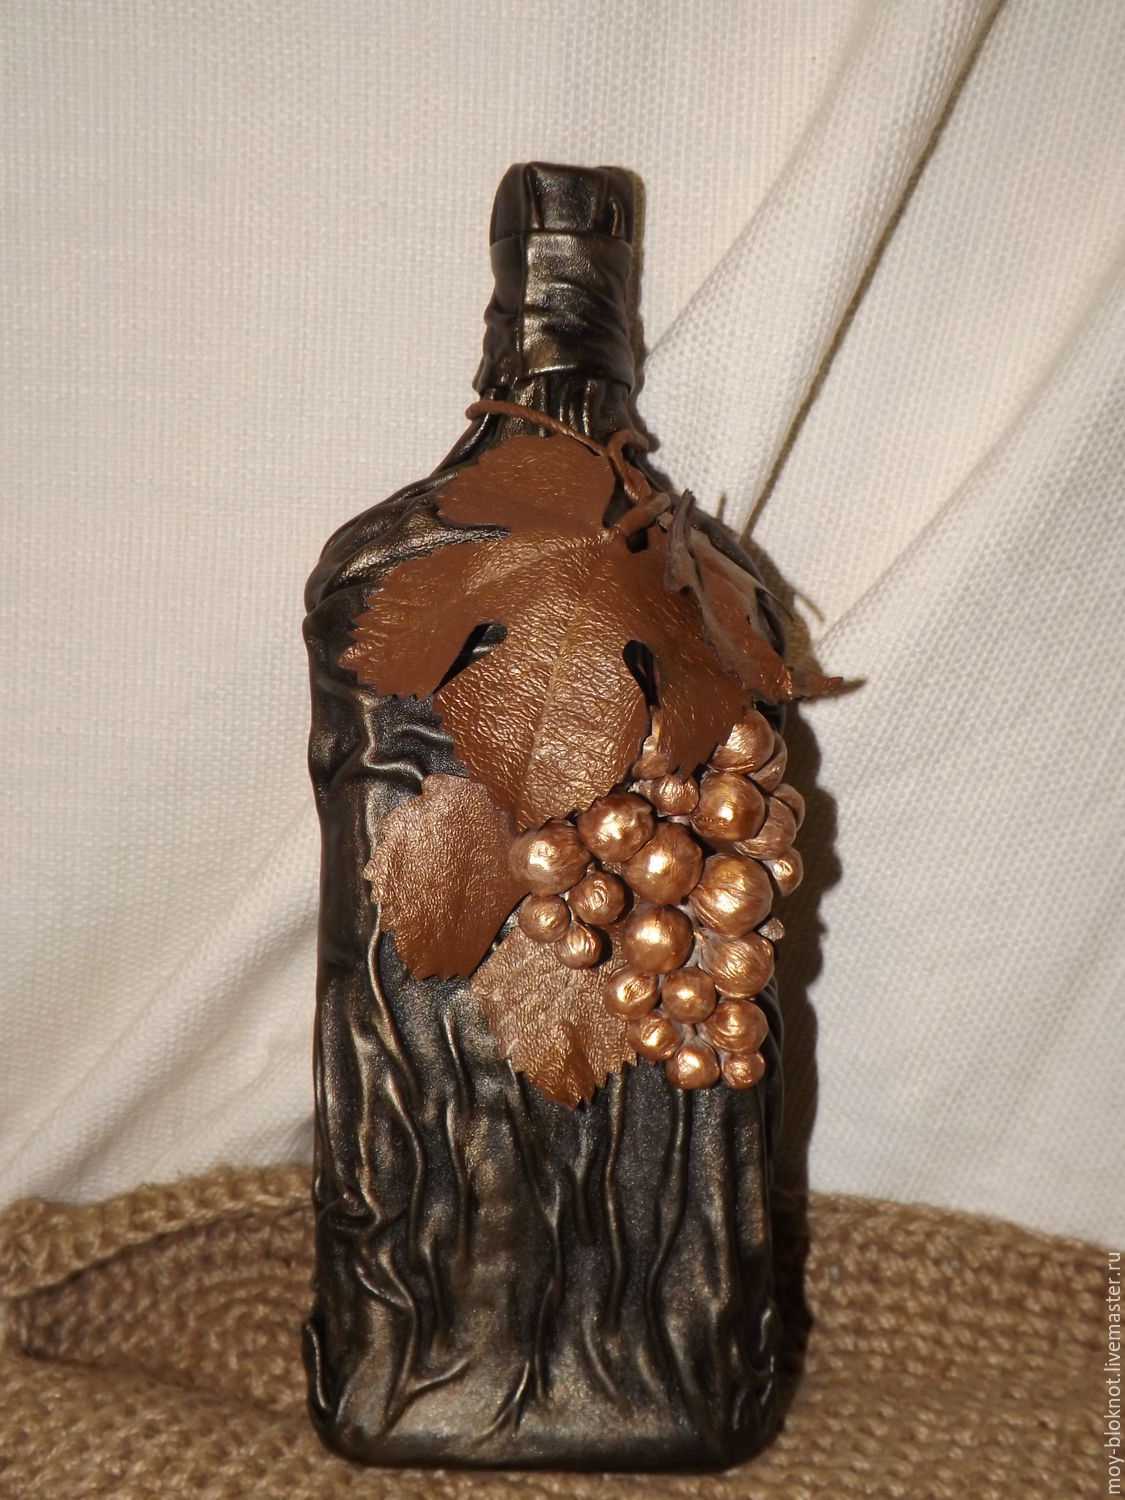 versione fai-da-te di una bella decorazione di bottiglie di cuoio